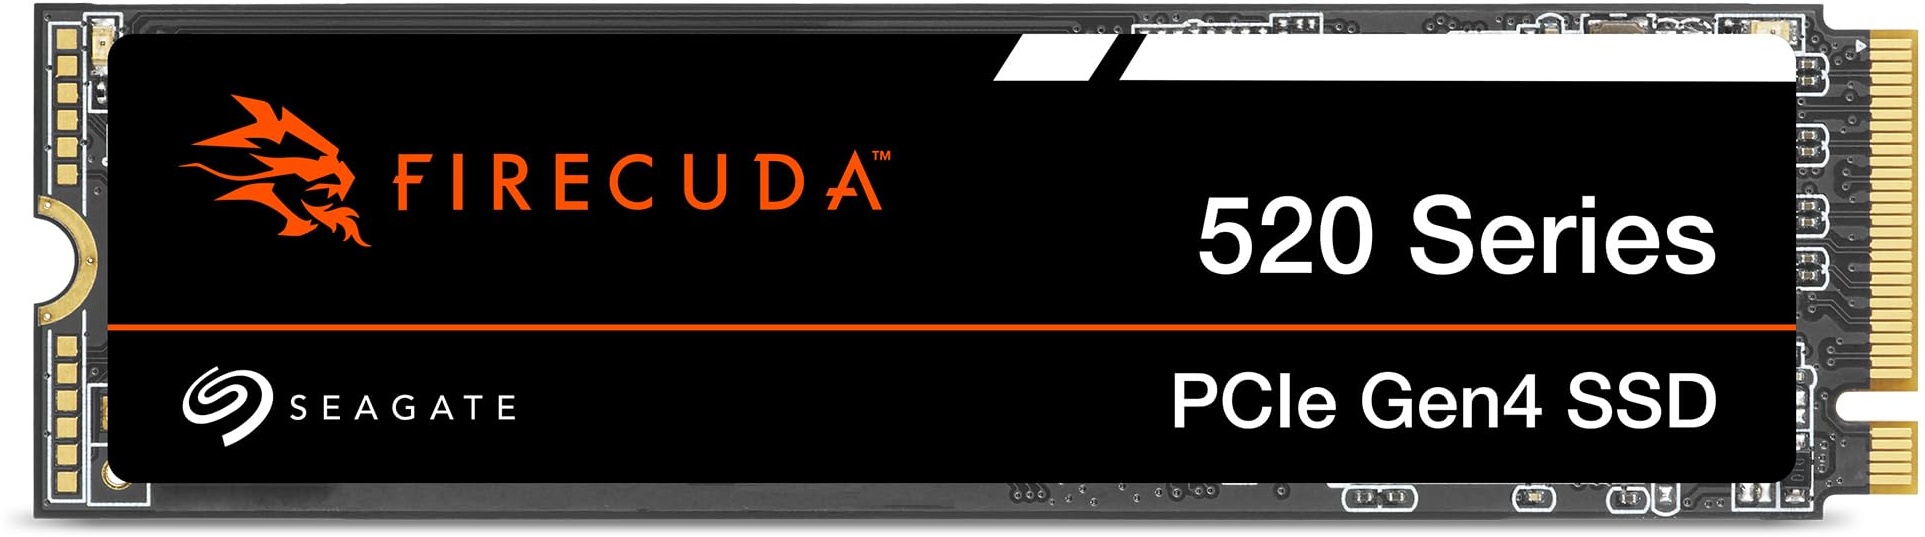 Seagate FireCuda 520 1TB interne SSD, M.2 PCIe Gen4, NVMe 1.3, bis zu 5000 MB/s, 3D TLC NAND, schwarz, 3 Jahre Data Rescue Service, Modellnr.: ZP1000GV3A012